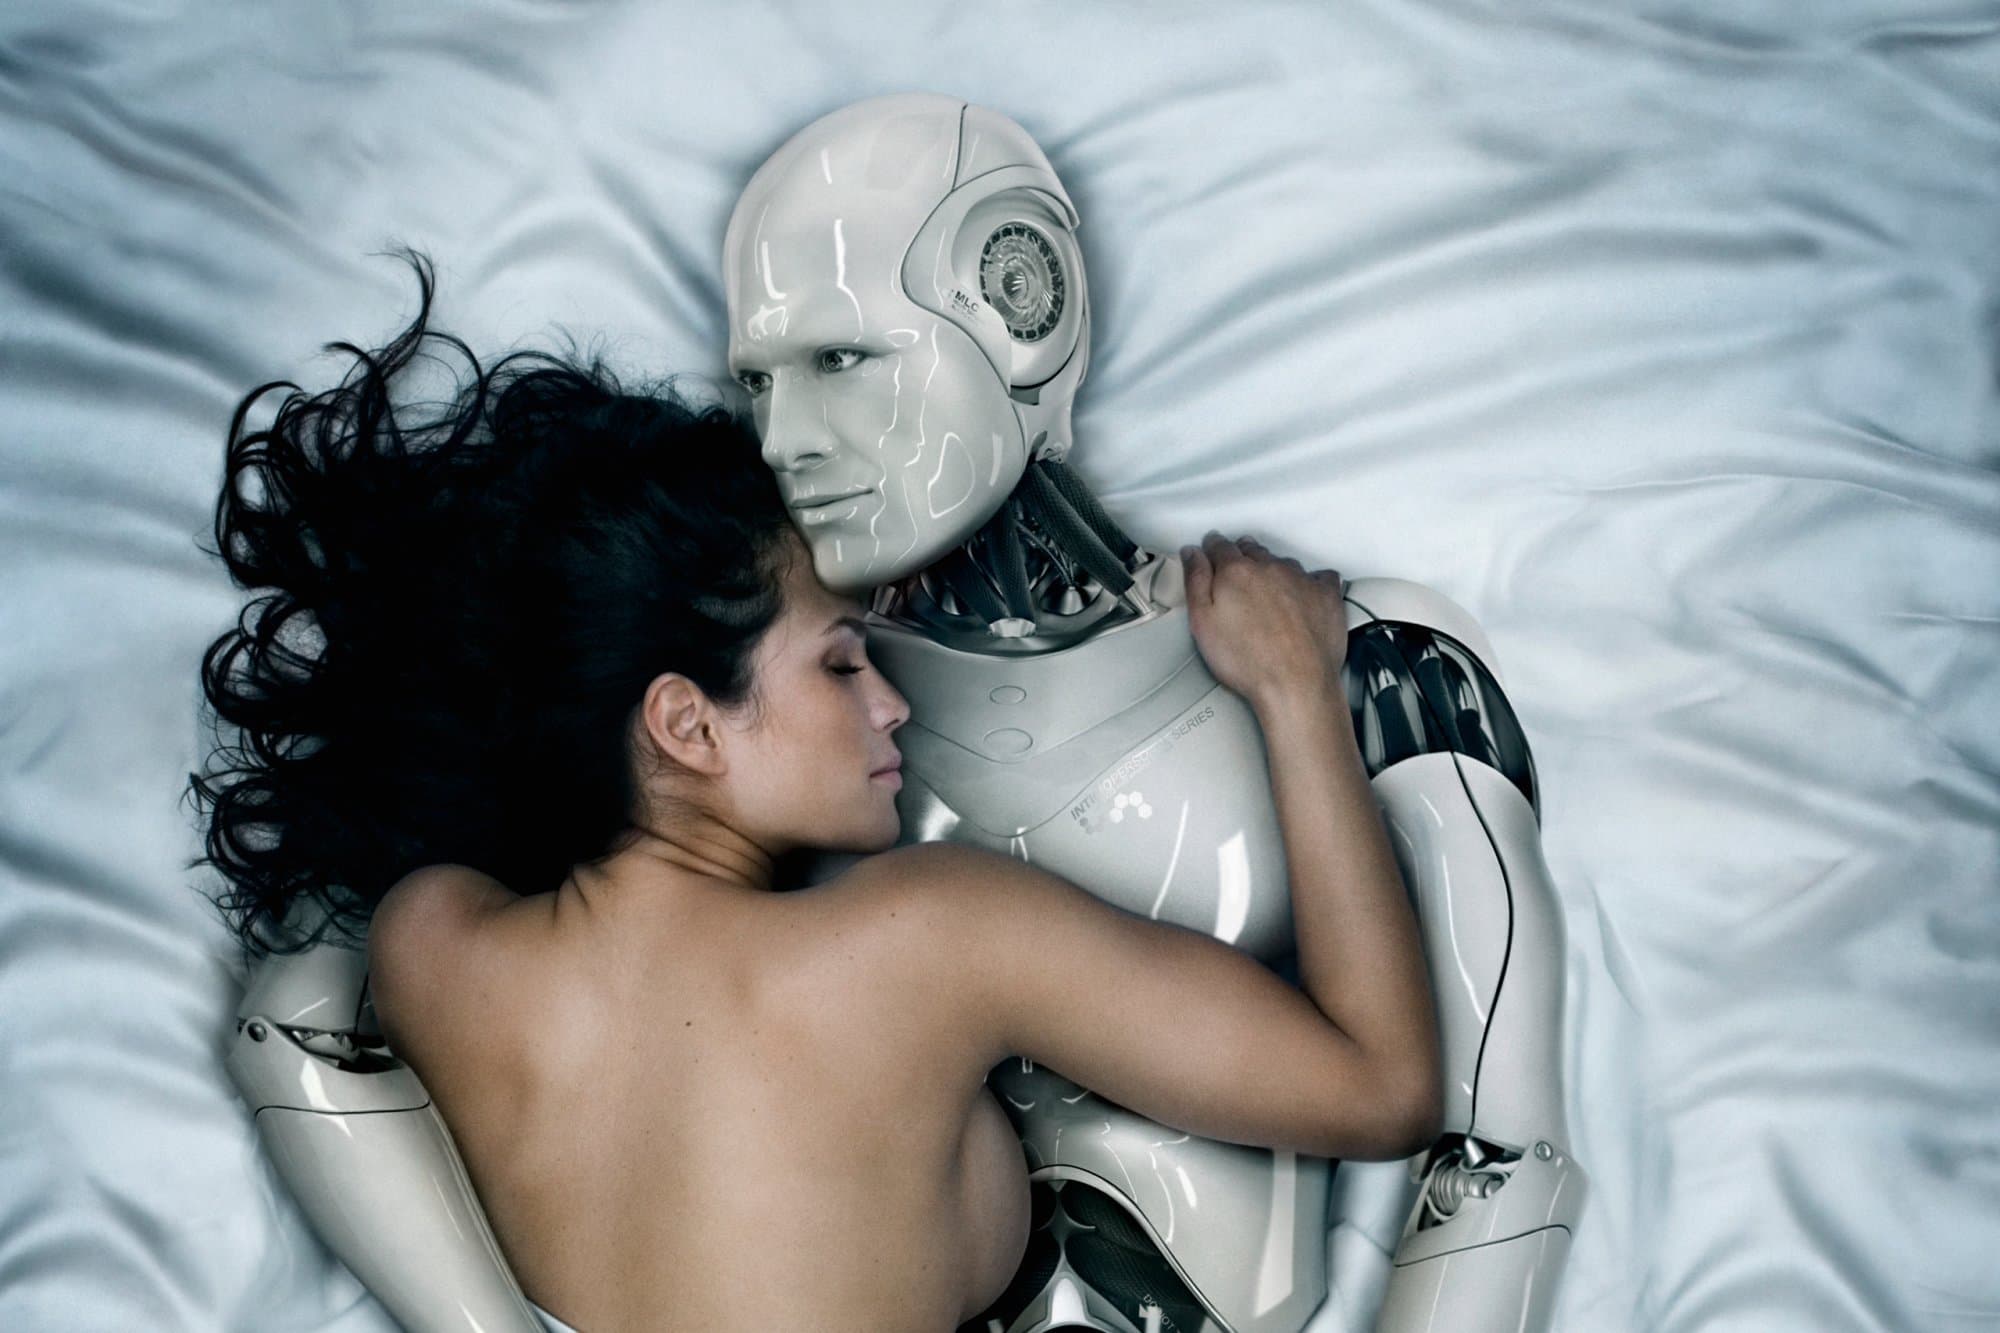 sexbot femme homme robot